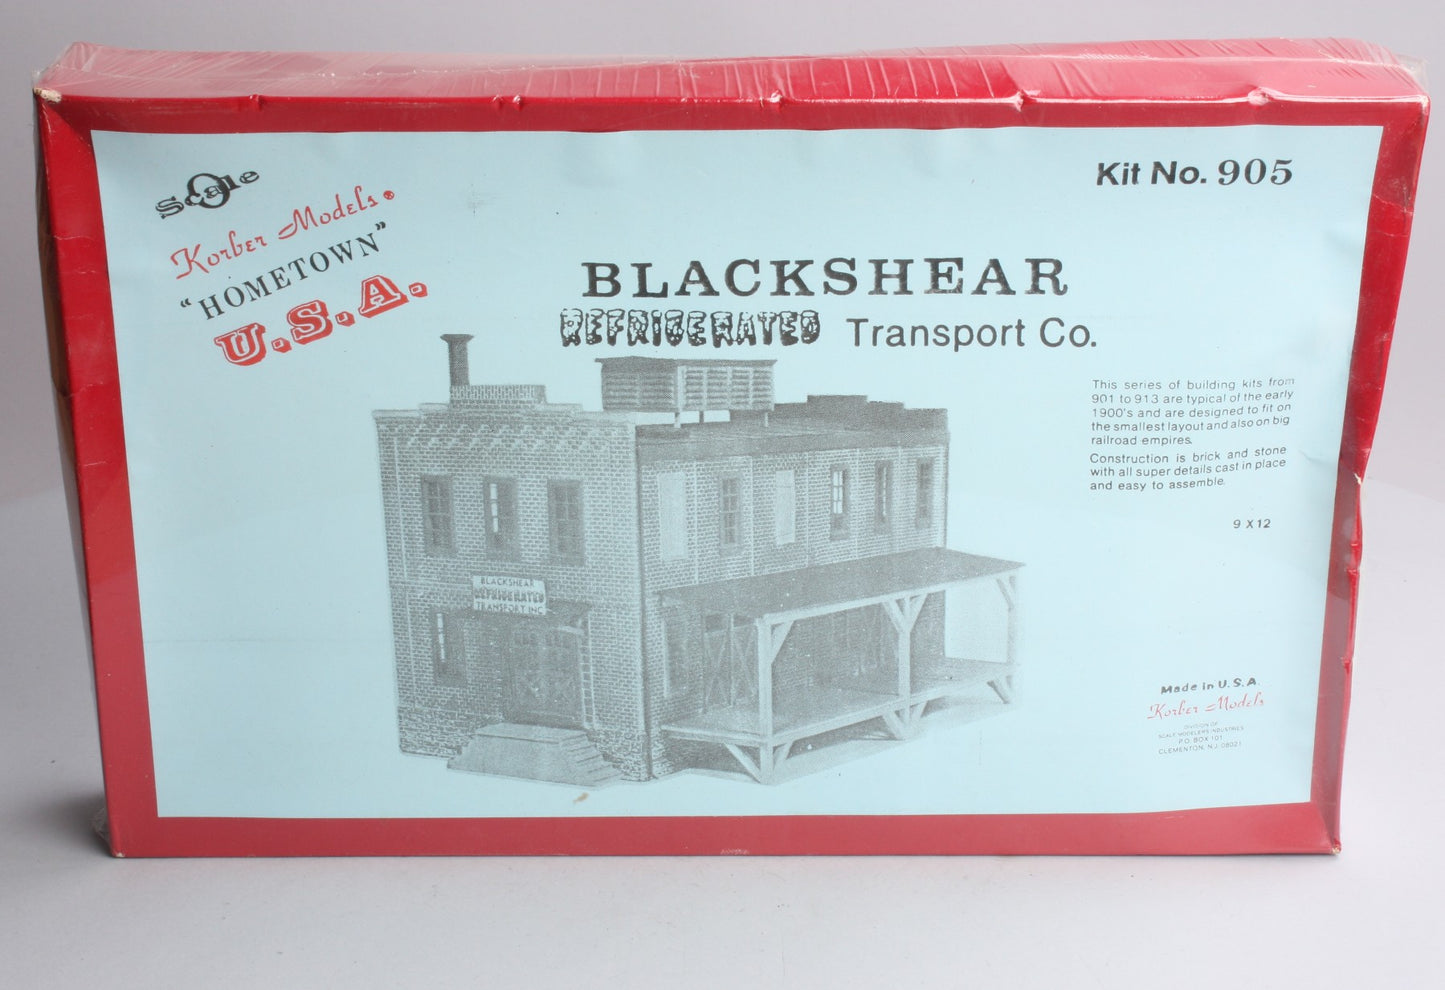 Korber 905 Blackshear Refrigerated Transport Co. Building Kit